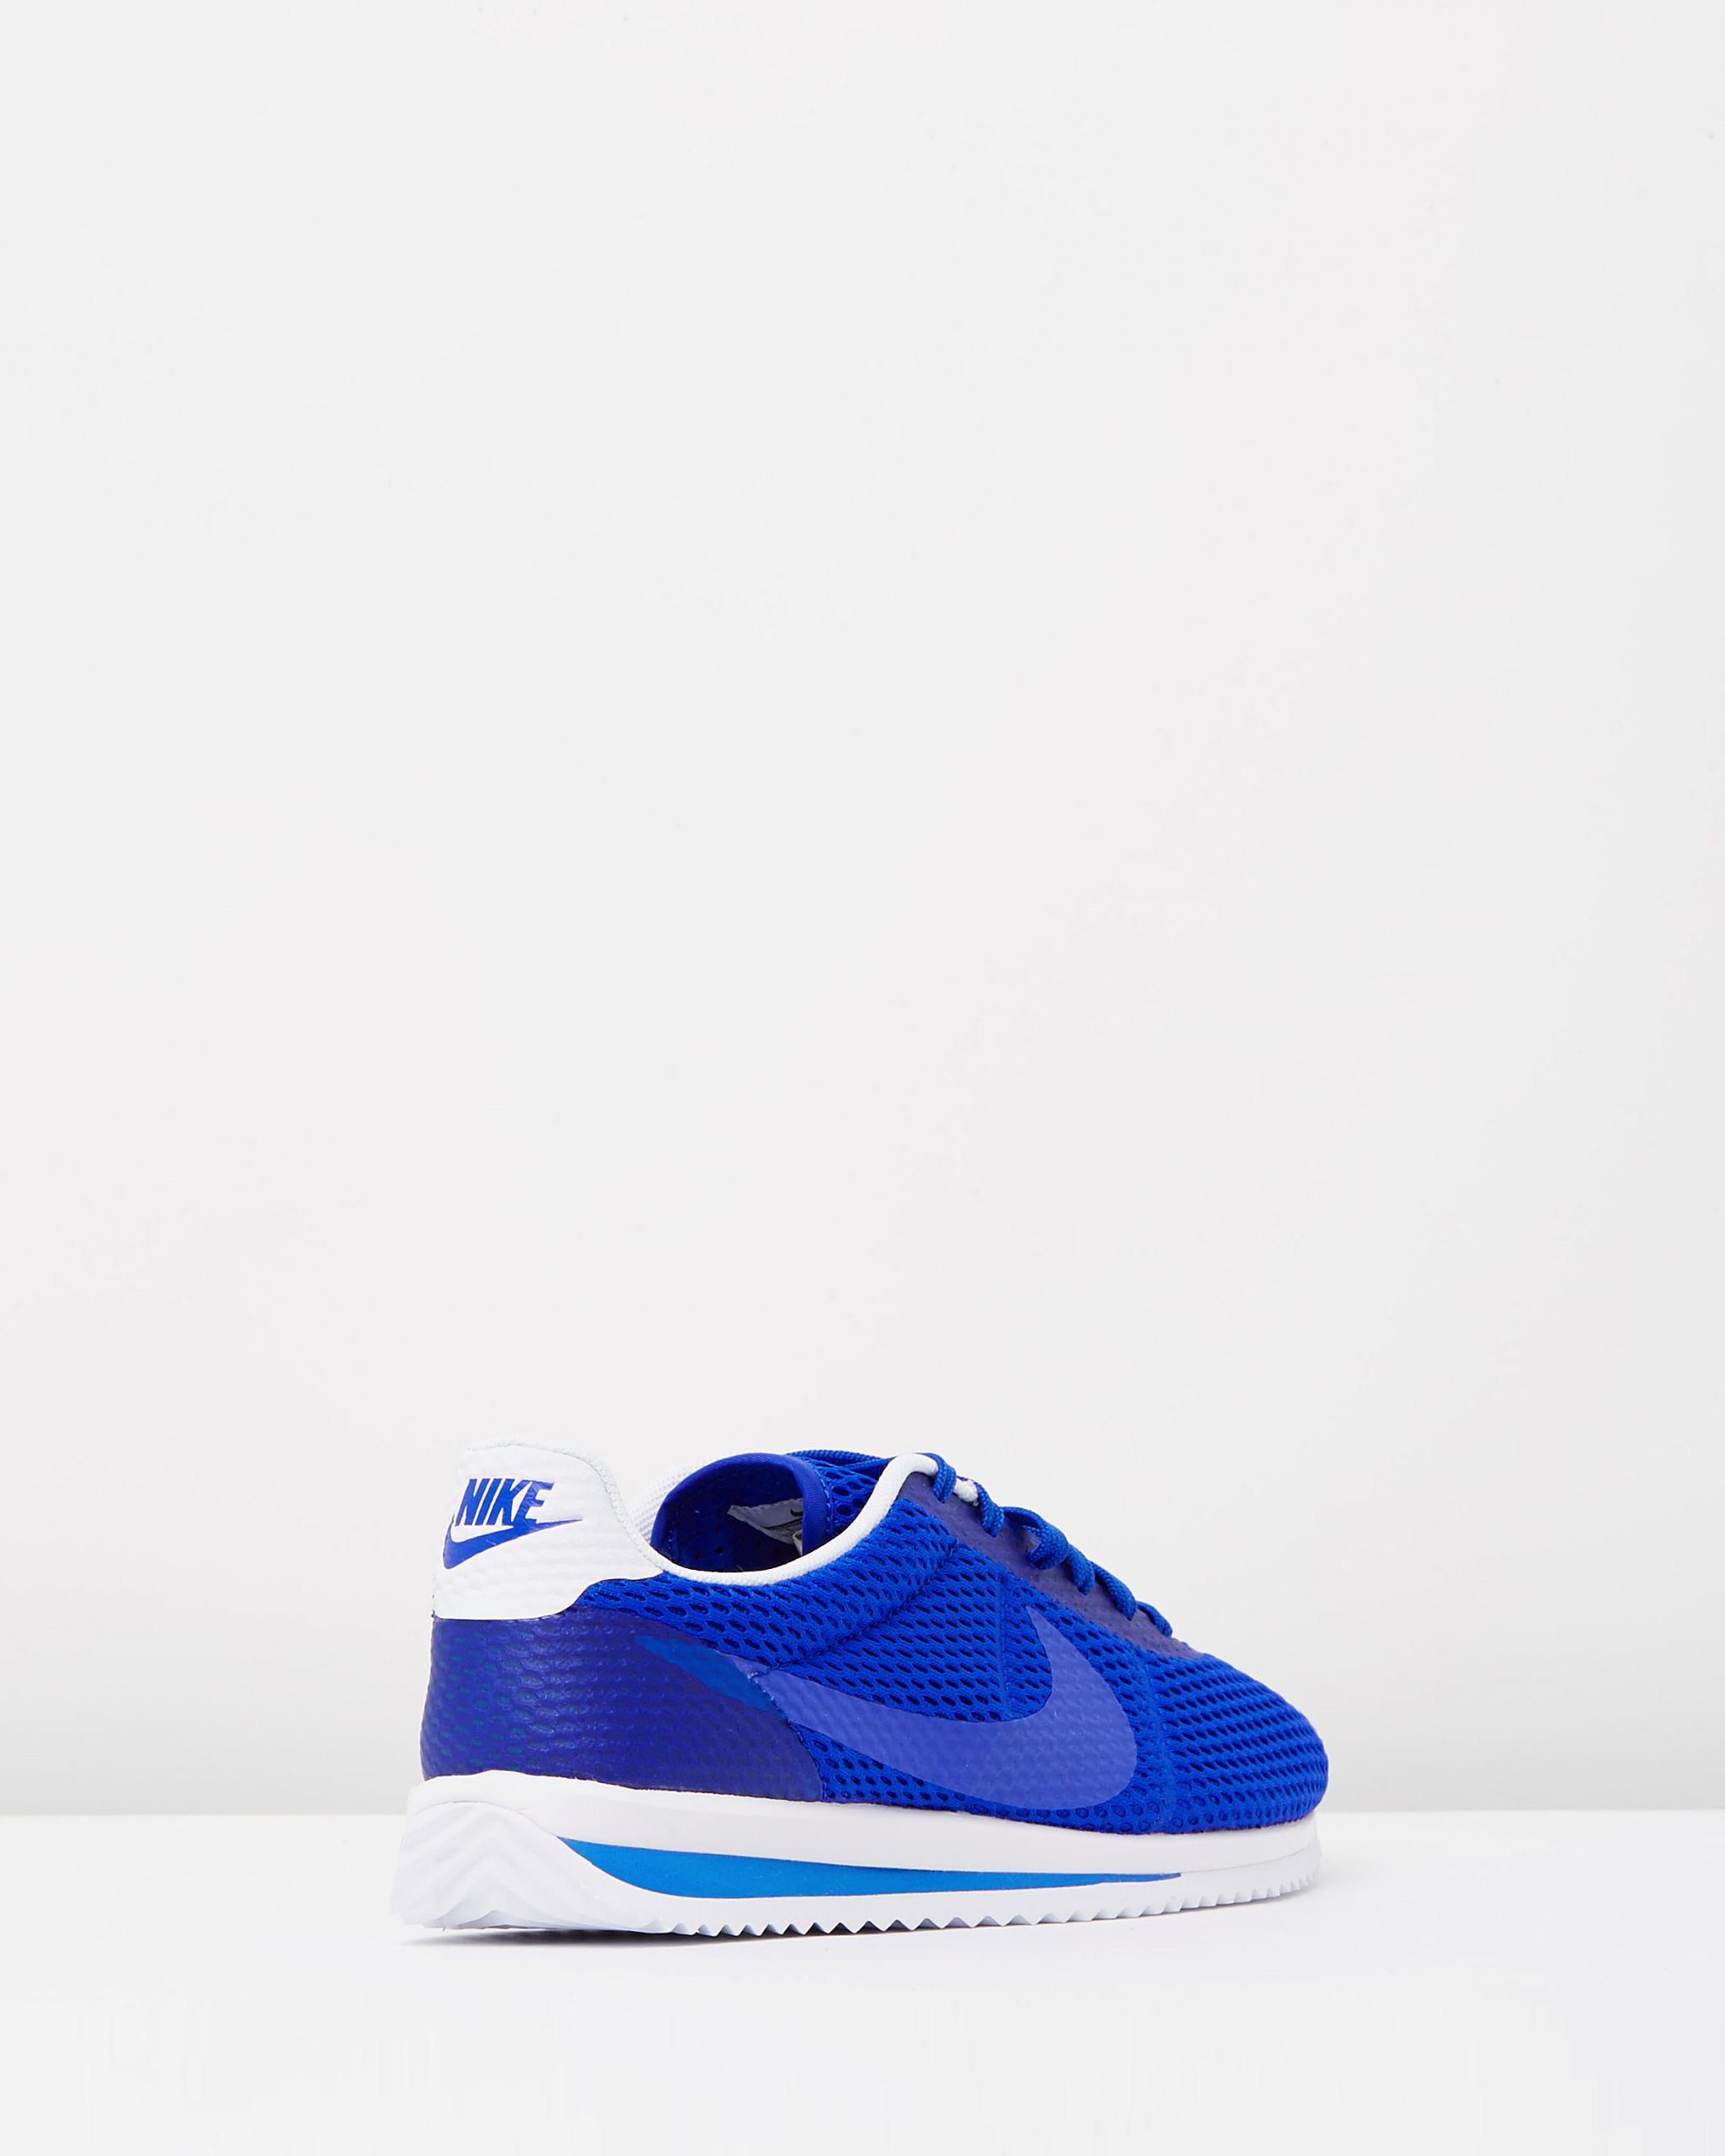 Nike Cortez Ultra BR Total Blue \u0026 White 